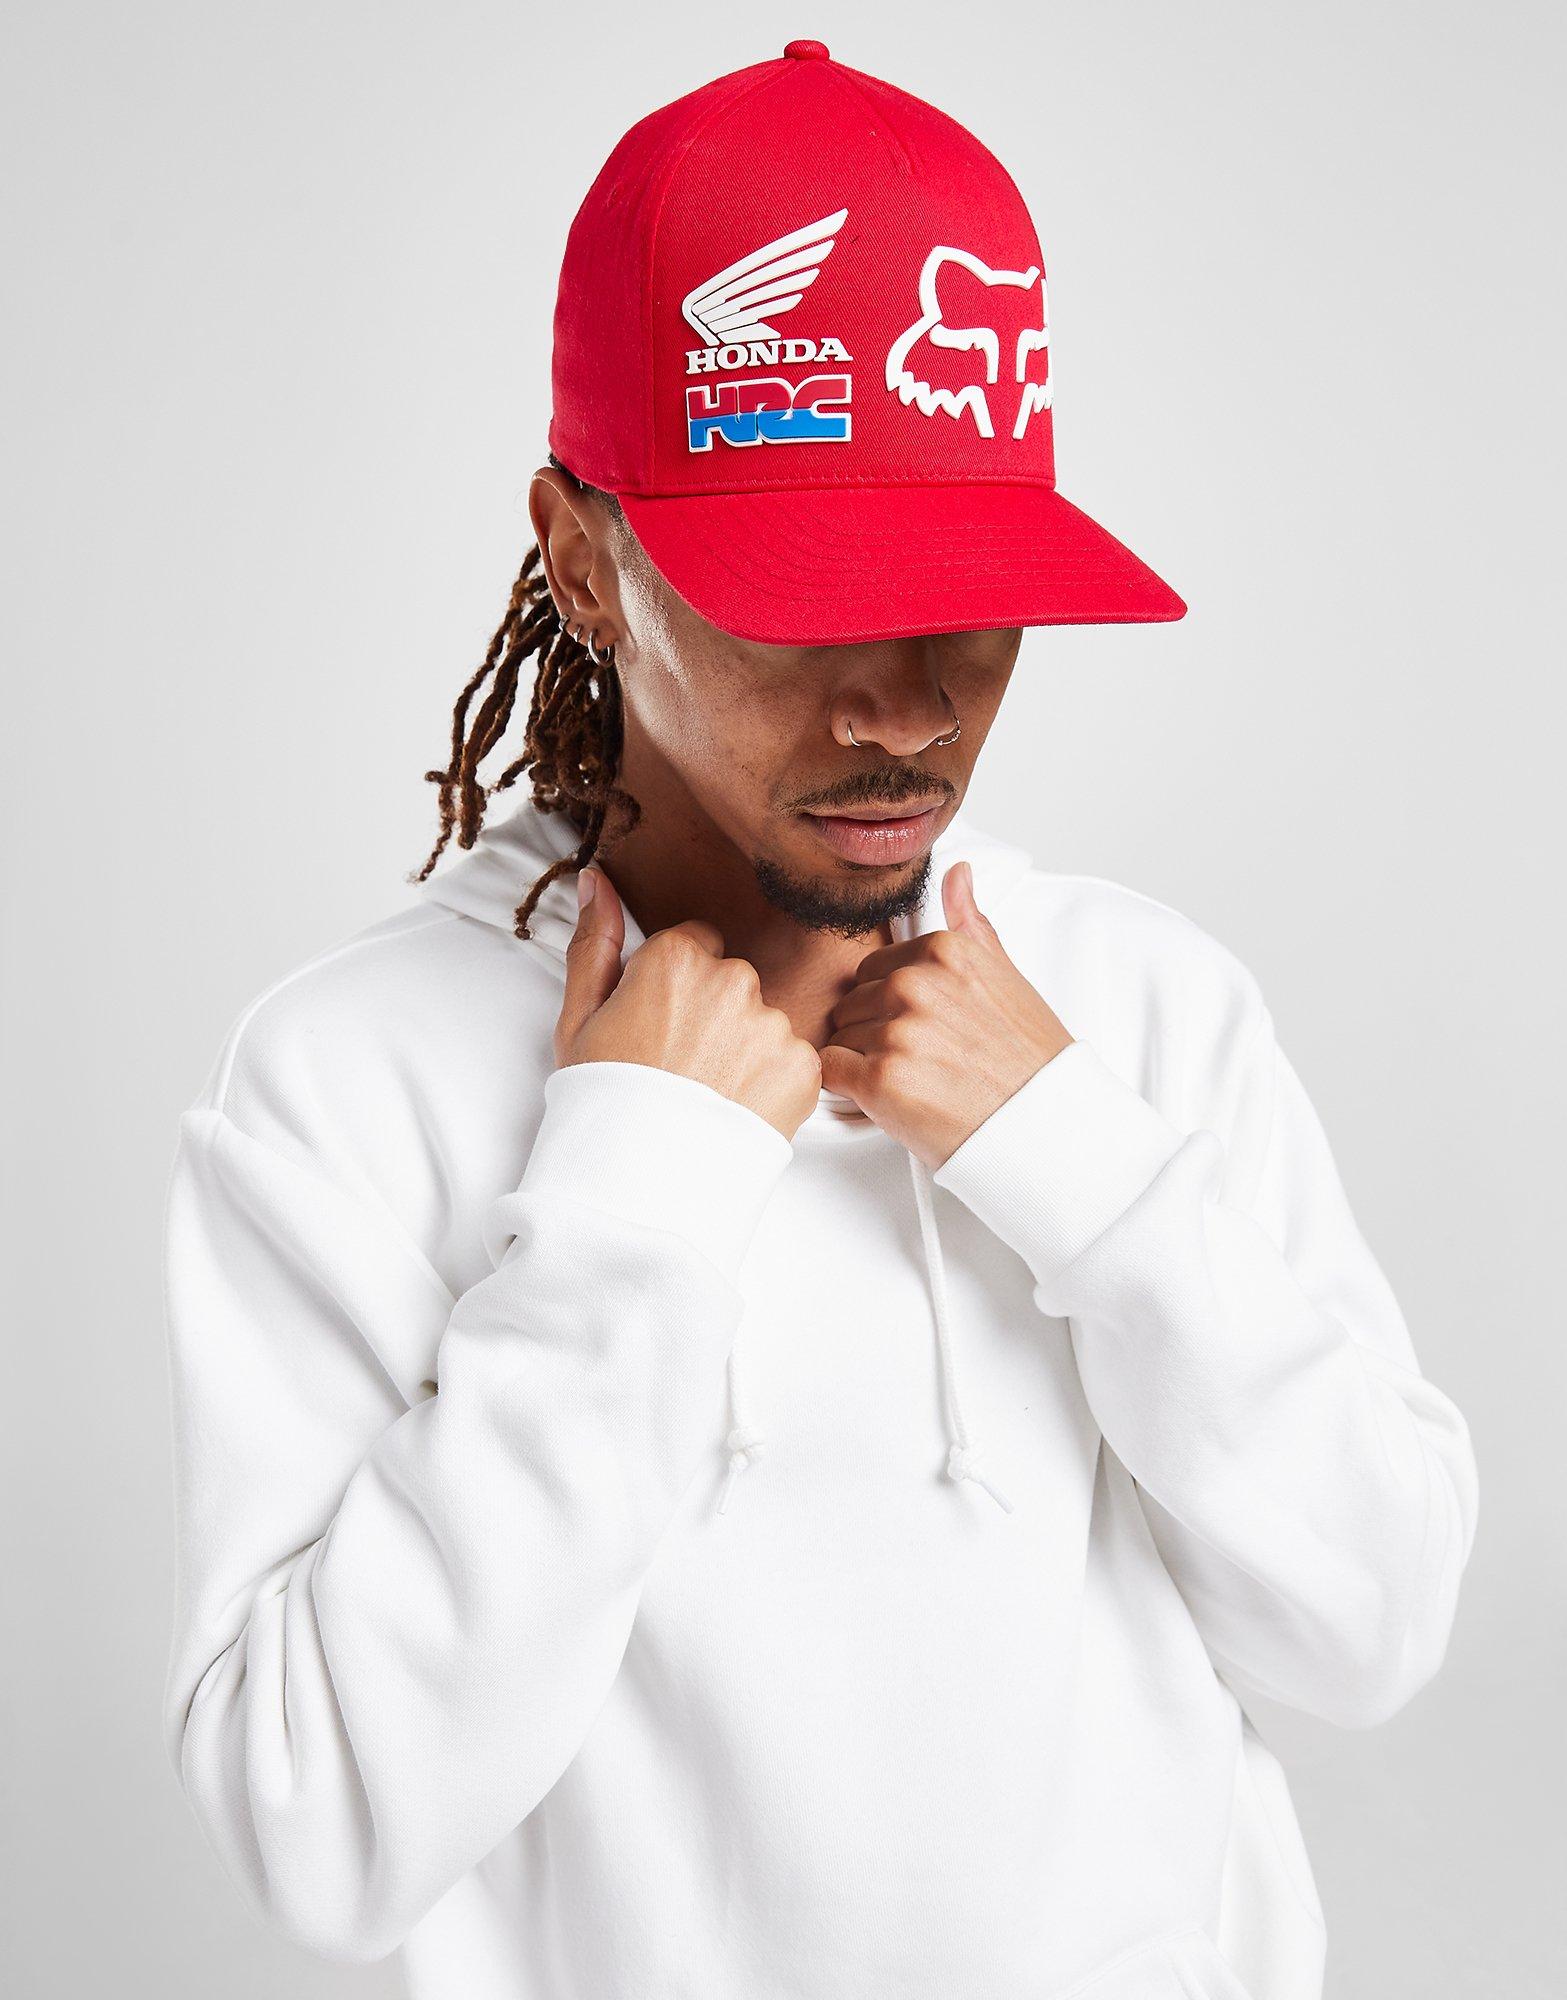 Brand New 2019 Genuine Honda Racing HRC FOX Merchandise Baseball Peak Cap Hat 